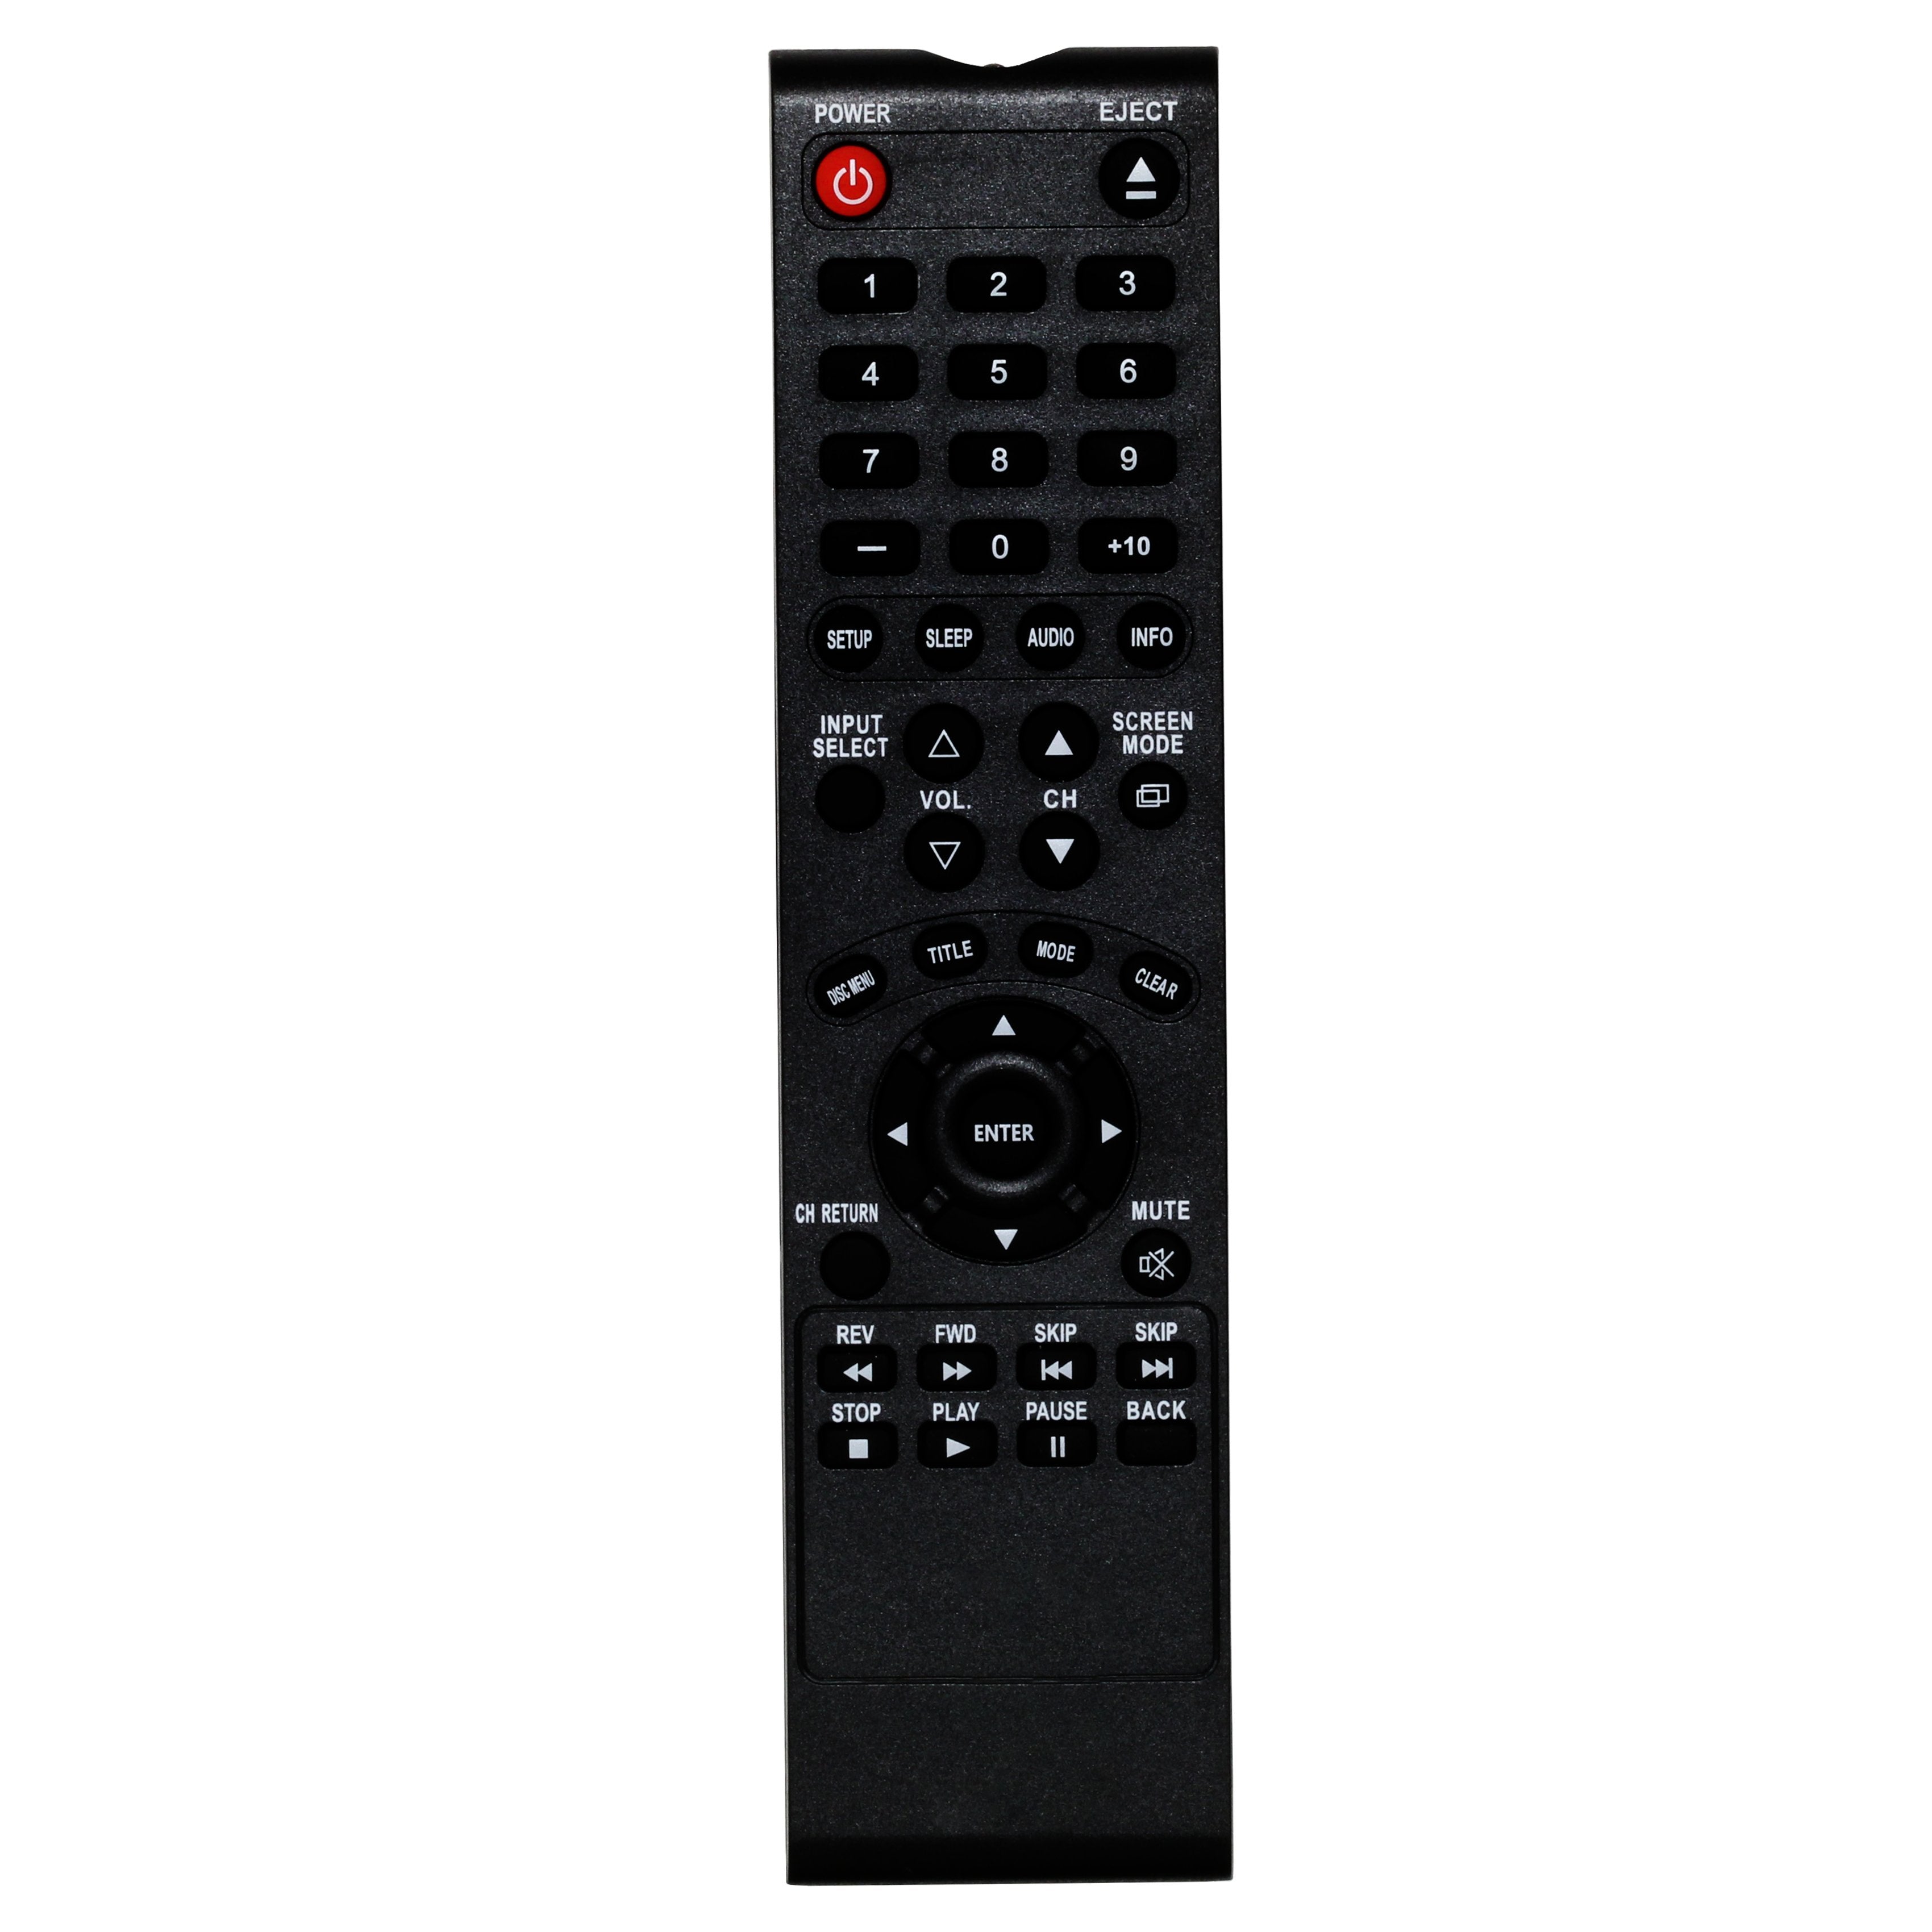 Sylvania RLJ320  TV Remote